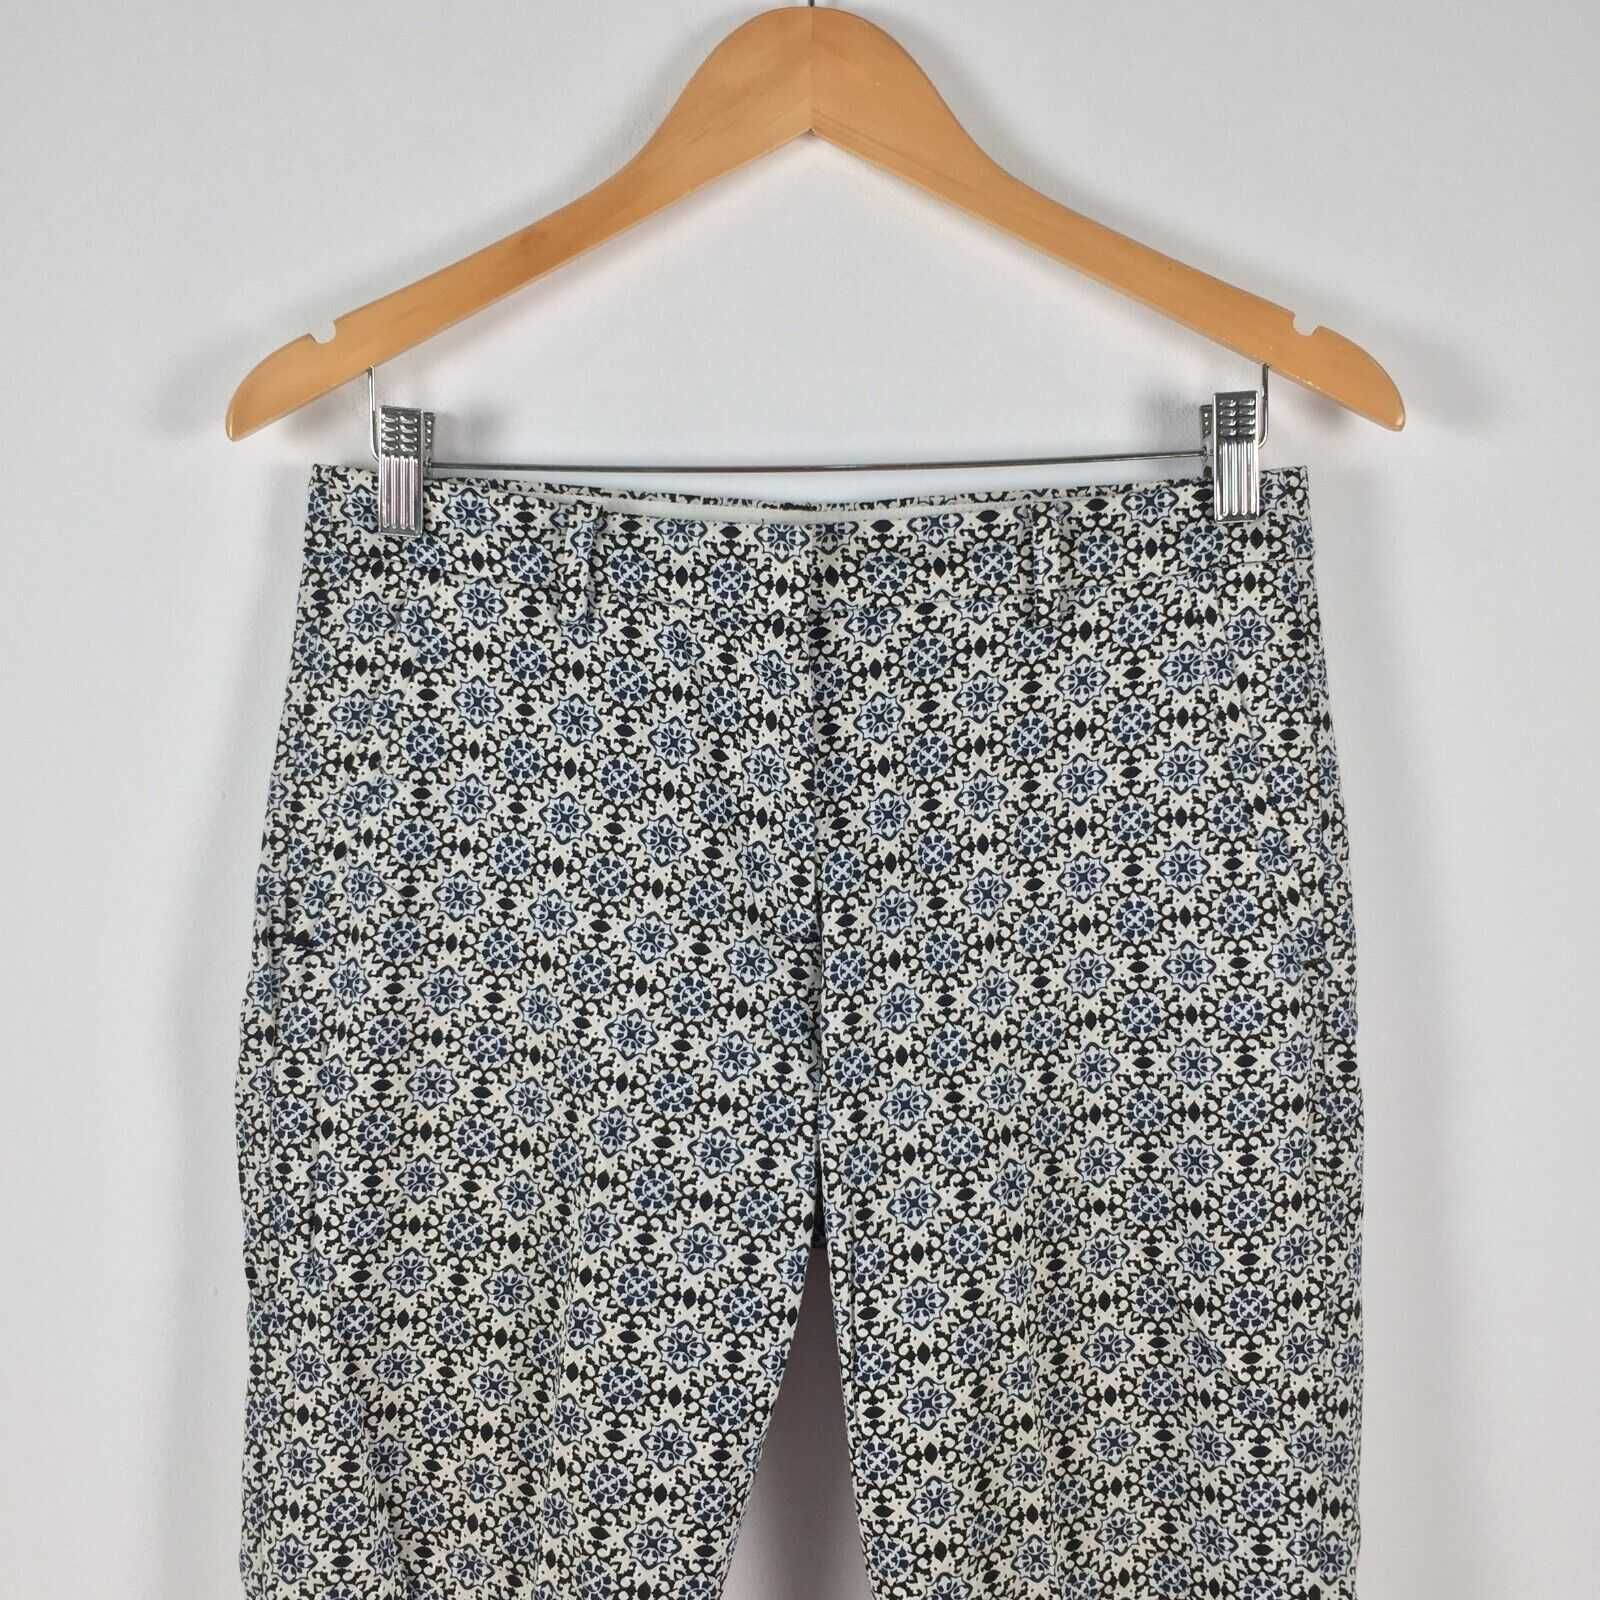 H&M spodnie cygaretki multicolor print  38